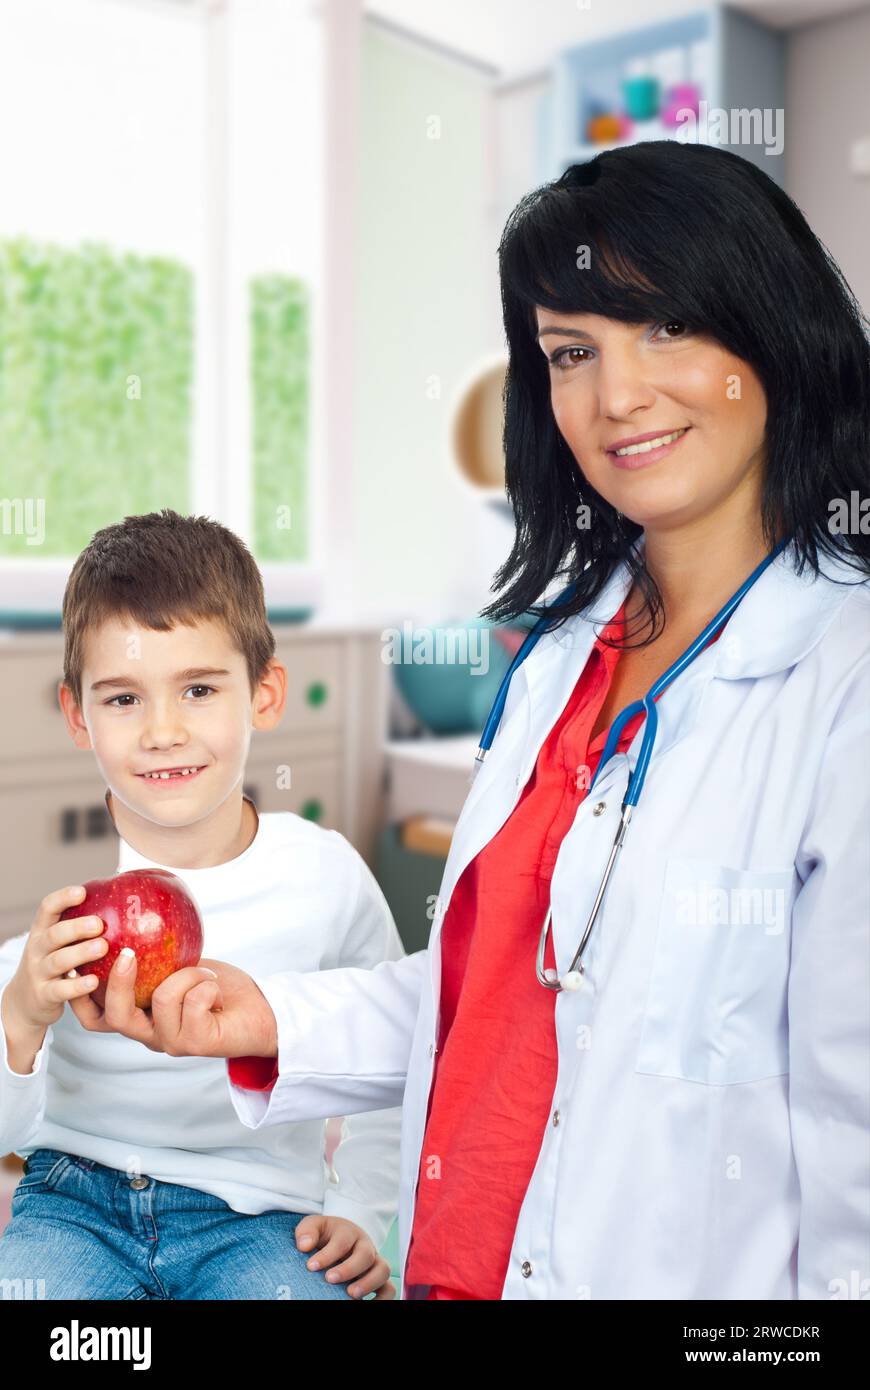 Felice medico donna dando una mela rossa a un bambino sorridente con denti mancanti Foto Stock